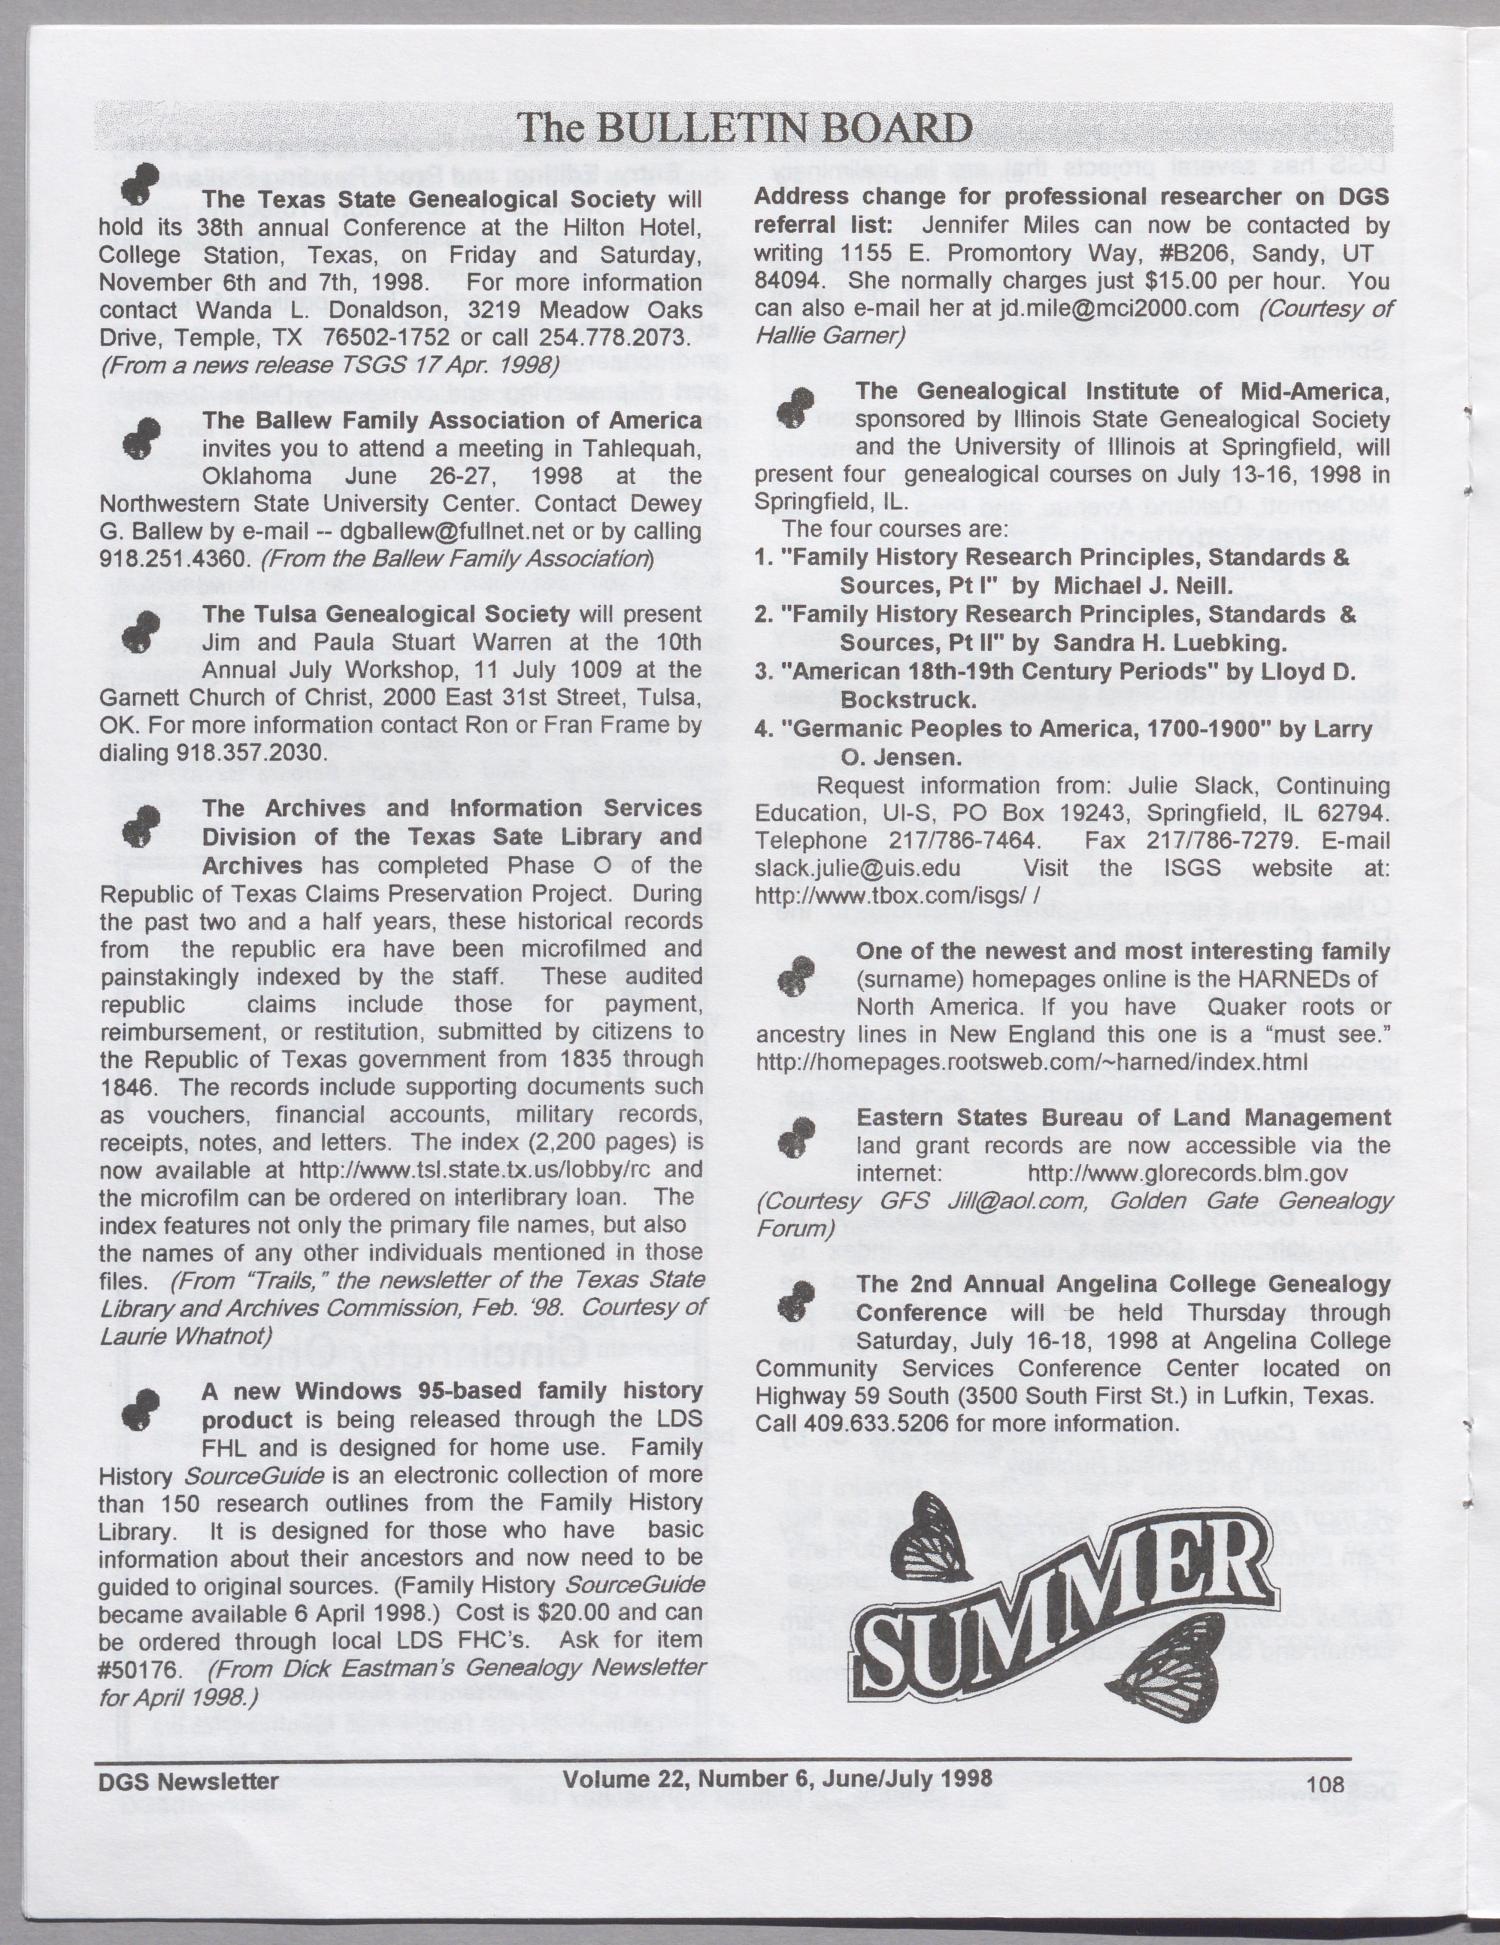 DGS Newsletter, Volume 22, Number 6, June/July 1998
                                                
                                                    108
                                                